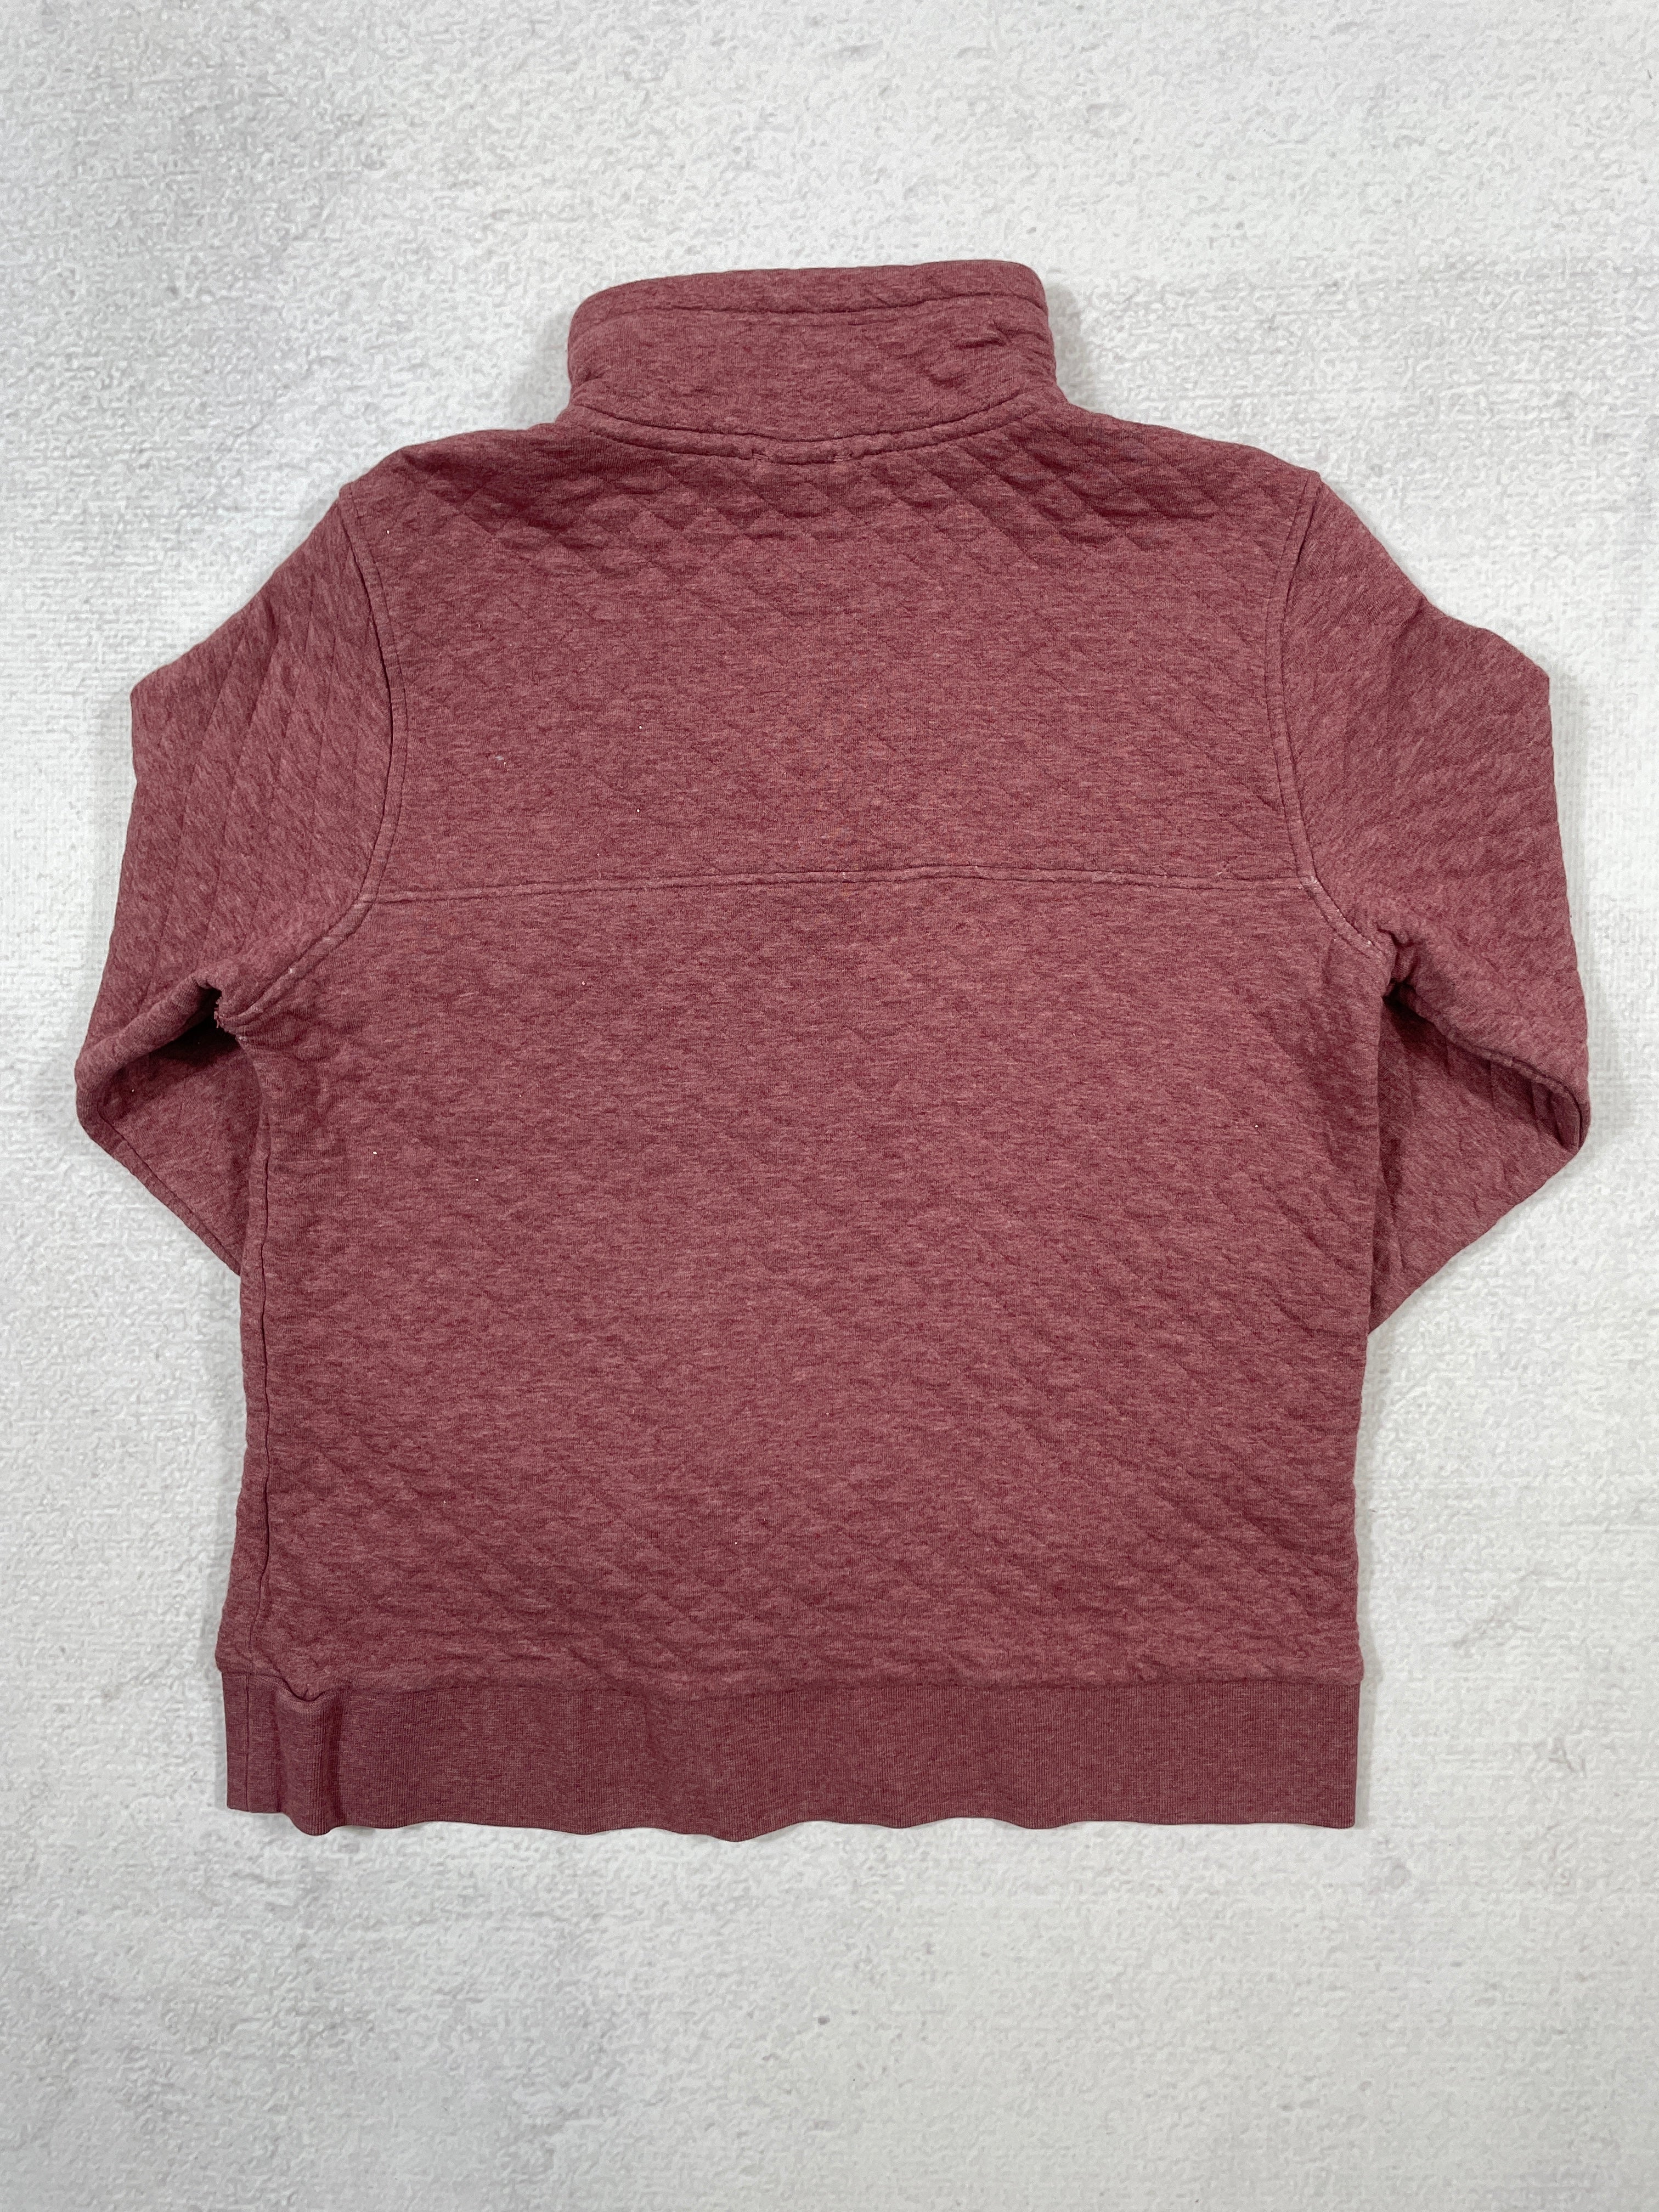 Vintage Patagonia Snap-T Sweatshirt - Women's Small